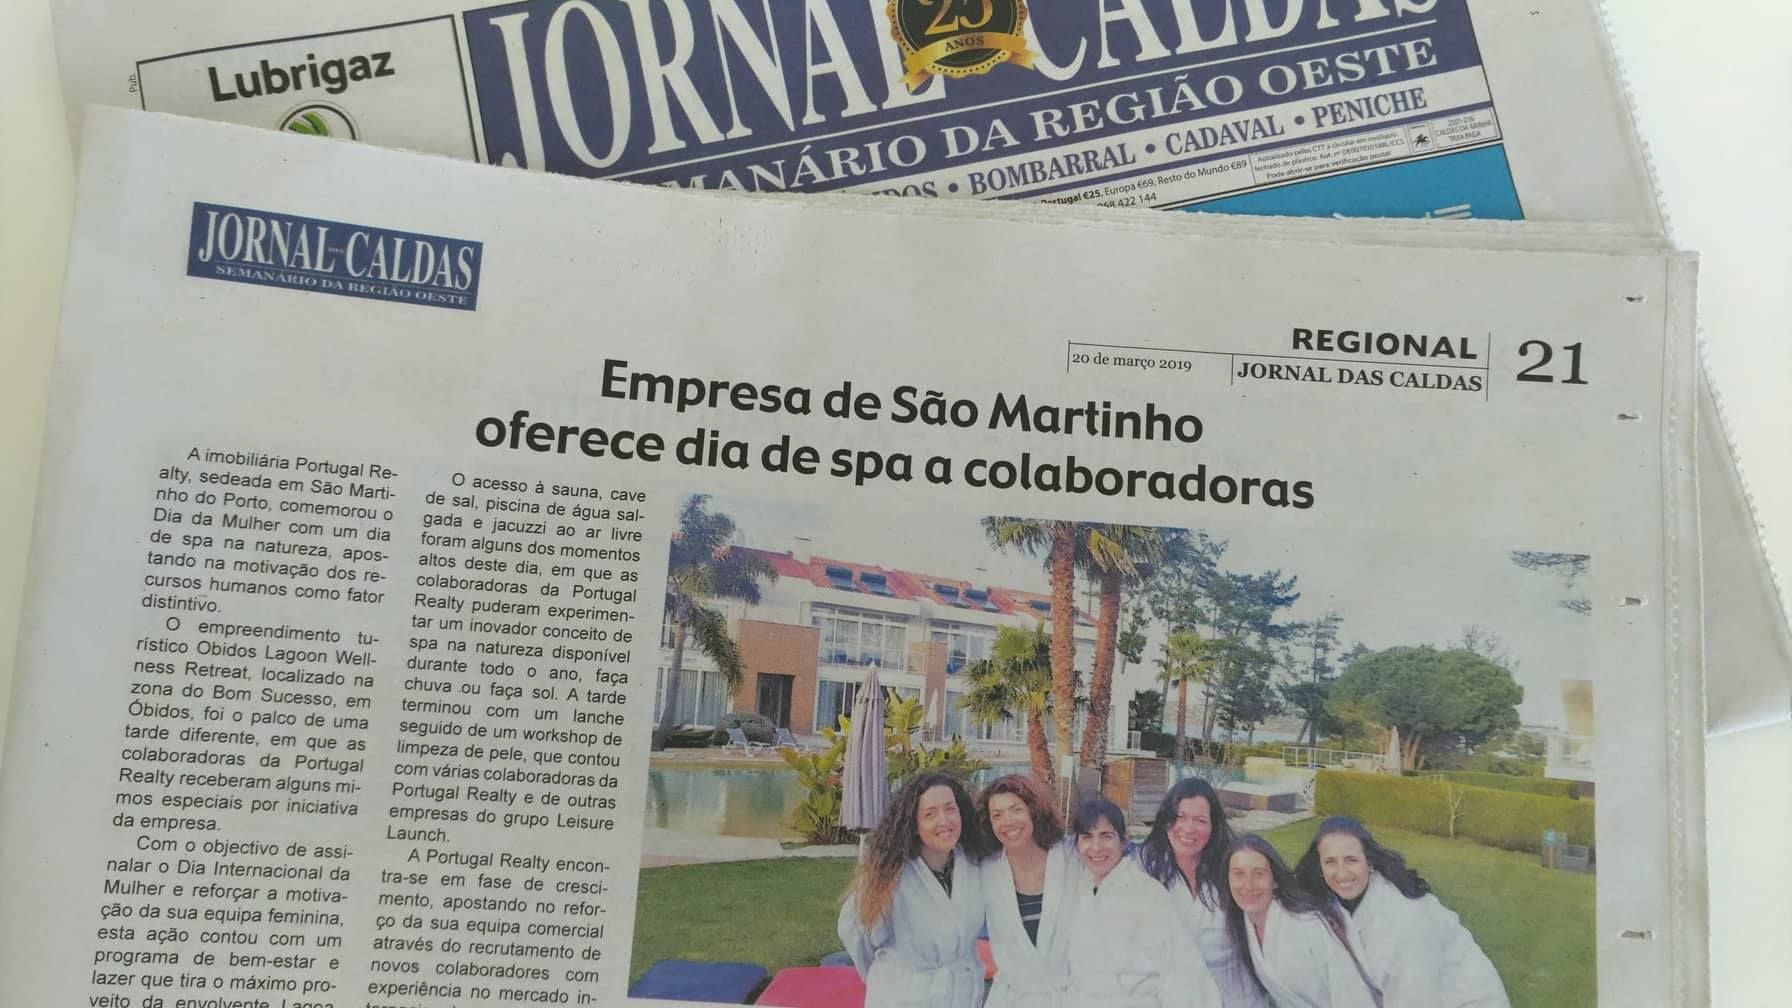 Team Building Initiative for Woman's Day 'Jornal Das Caldas' - March 2019